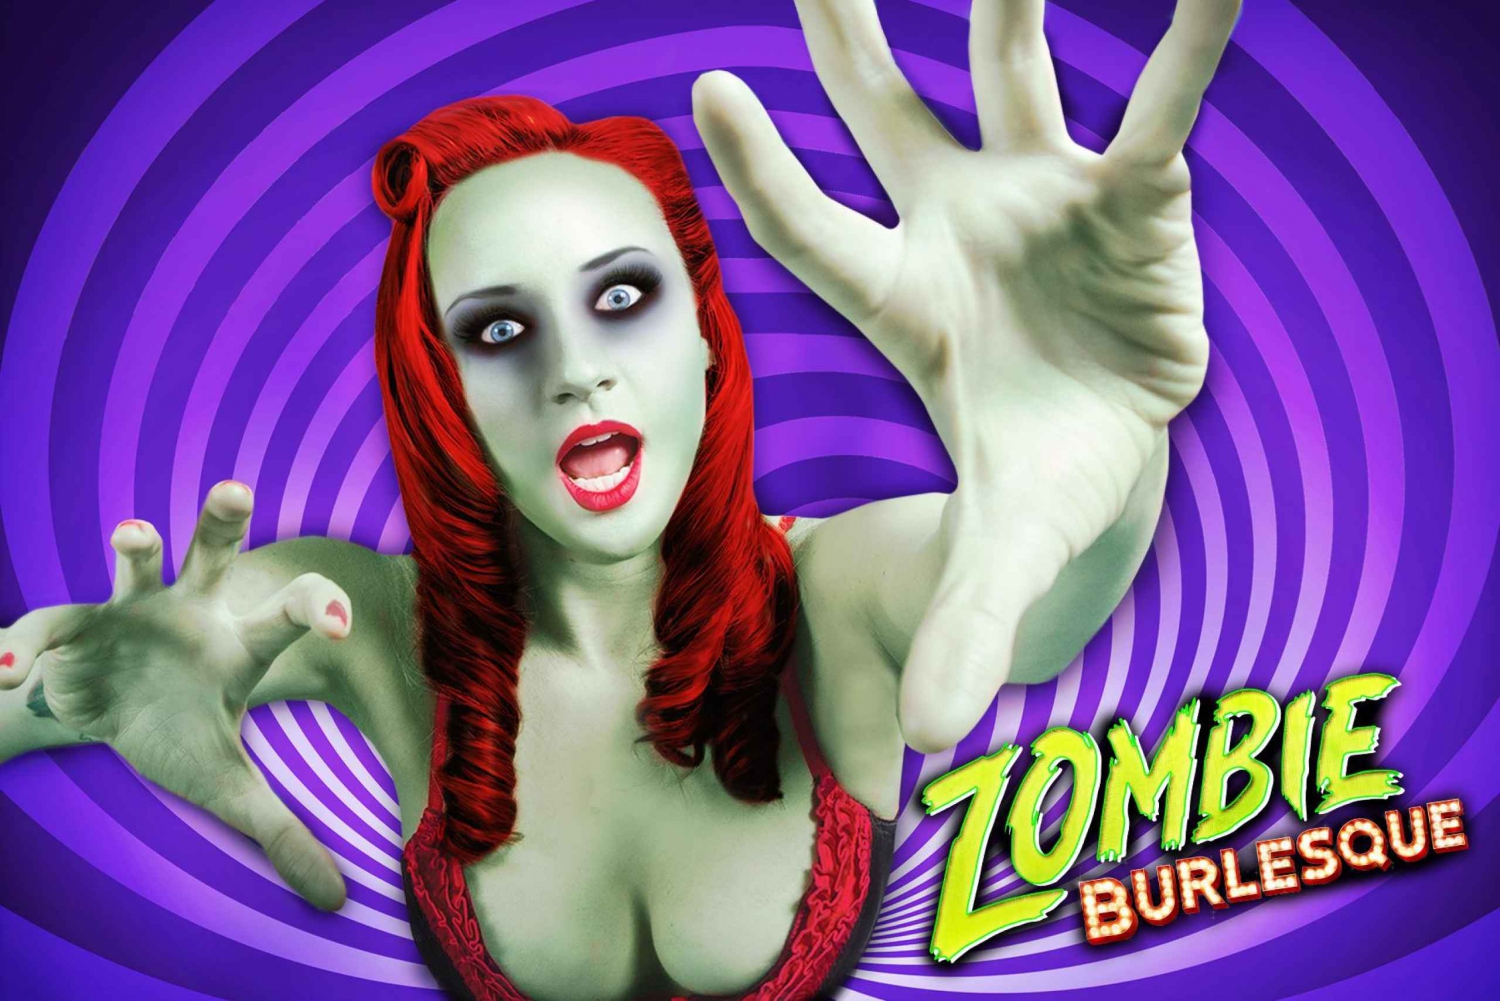 Las Vegas : Zombie Burlesque Comedy Musical Show Ticket